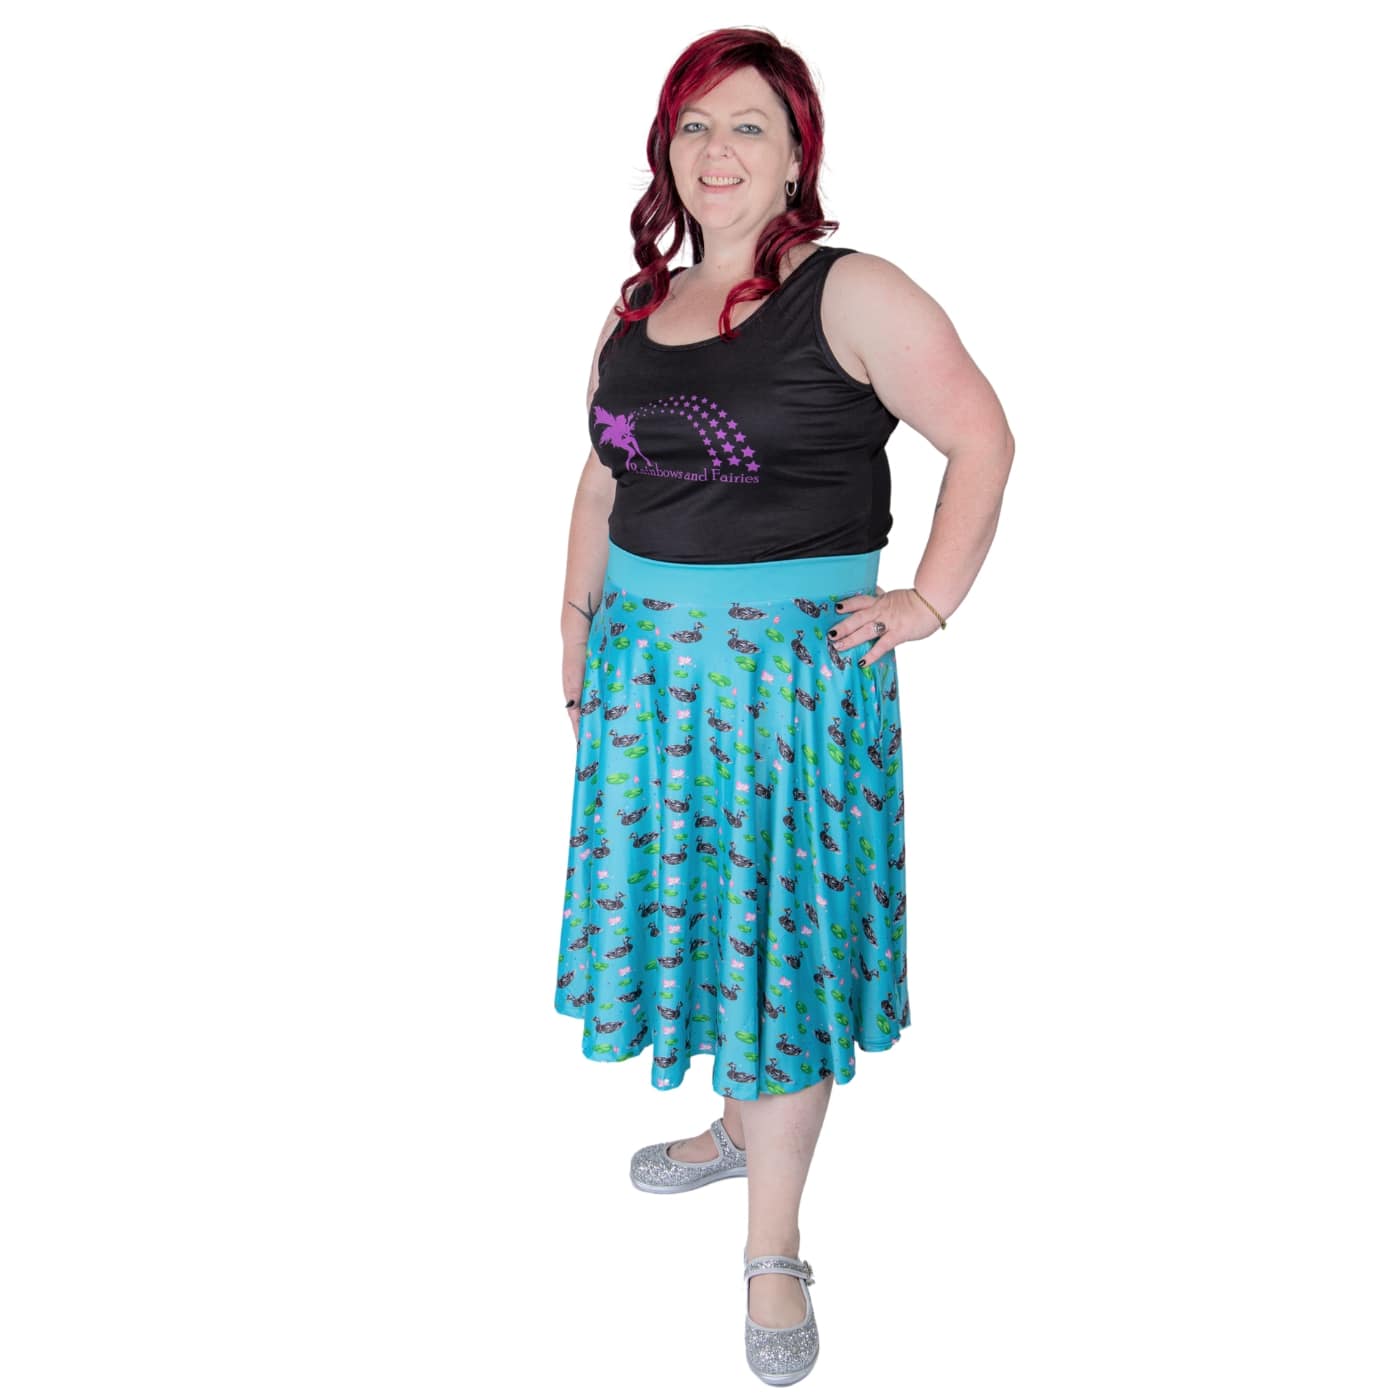 Mallard Swishy Skirt by RainbowsAndFairies.com.au (Ducks - Mallard - Lotus - Lilypad - Skirt With Pockets - Circle Skirt - Vintage Inspired - Kitsch) - SKU: CL_SWISH_MALLA_ORG - Pic-02